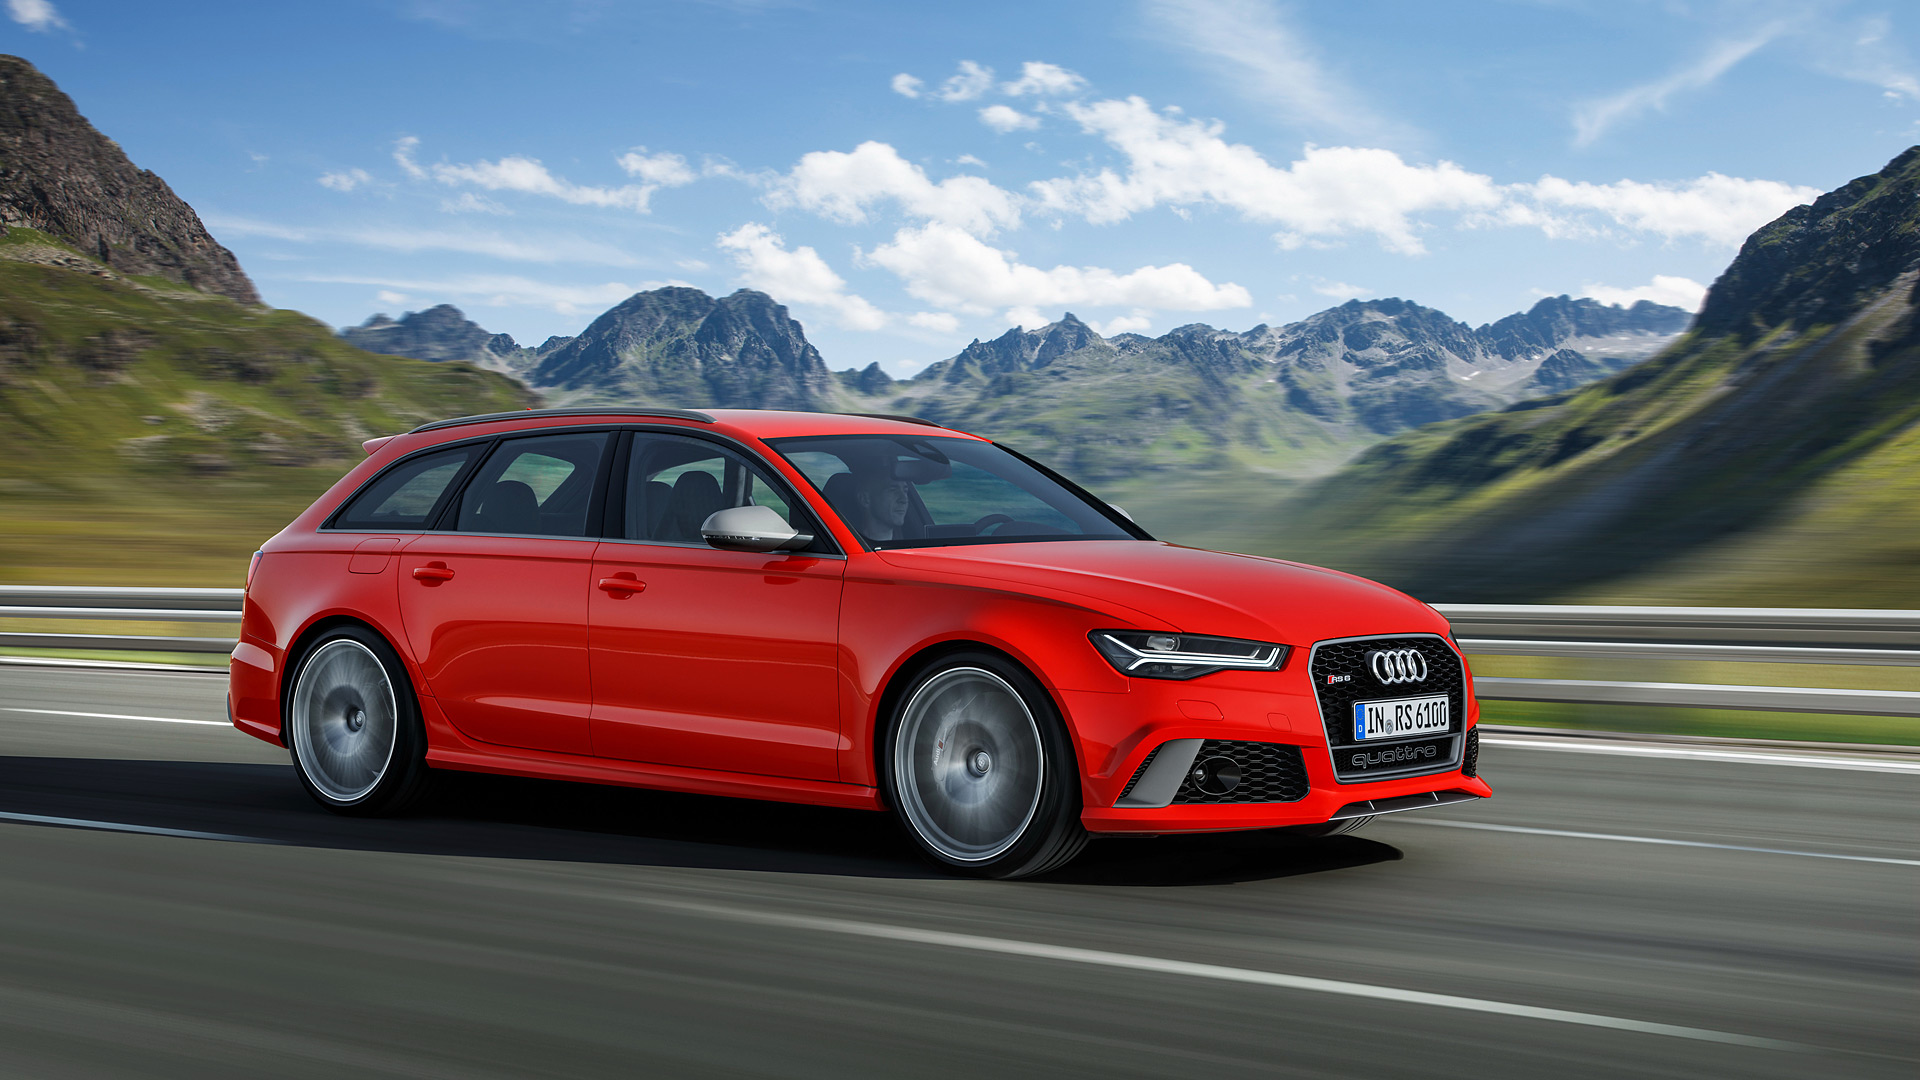 2016 Audi Rs6 Avant Performance Picture - New Audi Car Hd , HD Wallpaper & Backgrounds